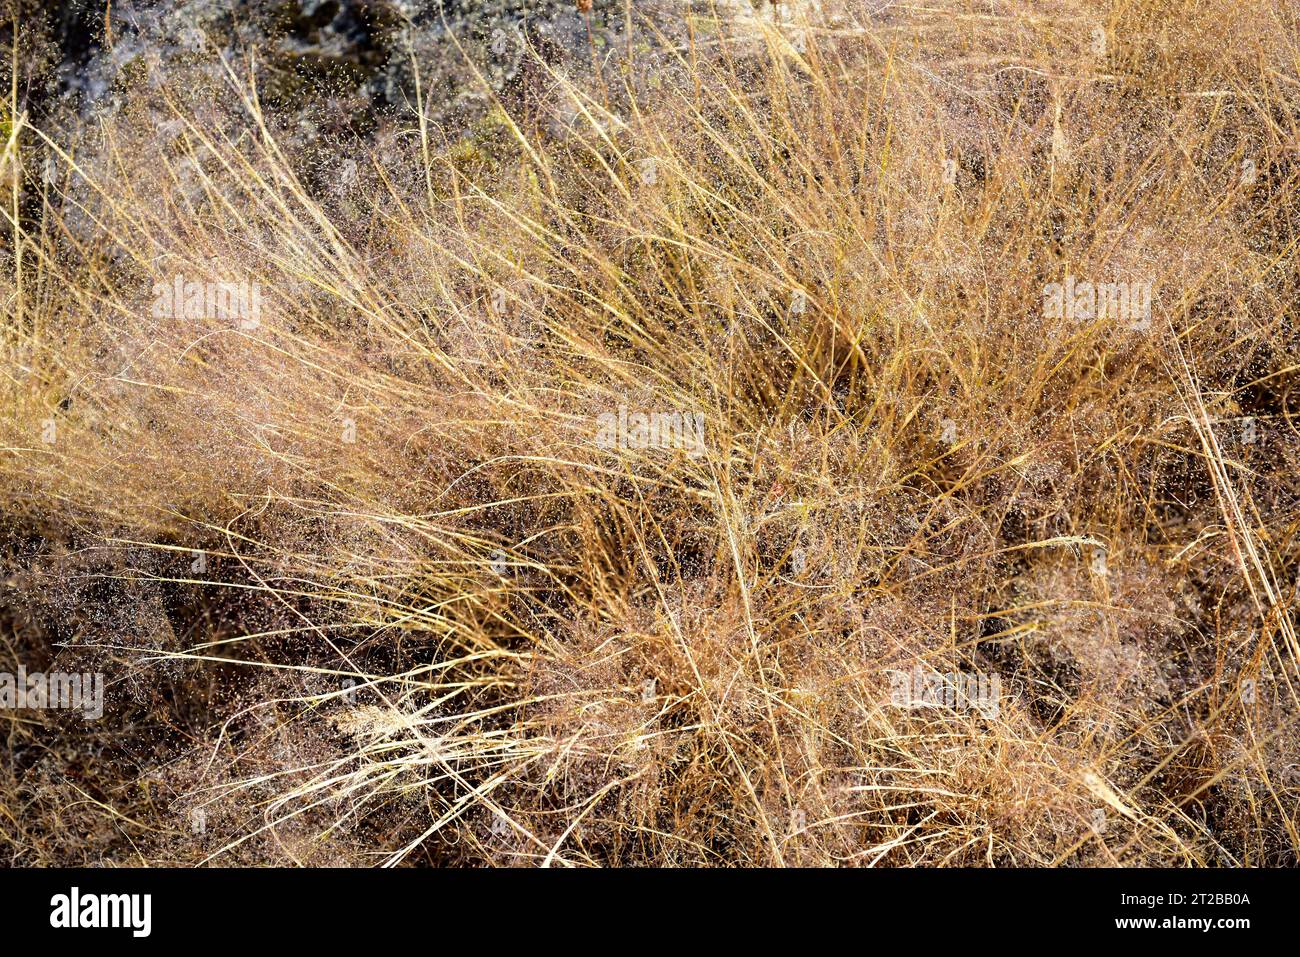 Wavy hair-grass (Deschampsia flexuosa or Avenella flexuosa) is a perennial herb native to Eurasia, Africa and Americas. This photo was taken in Arribe Stock Photo